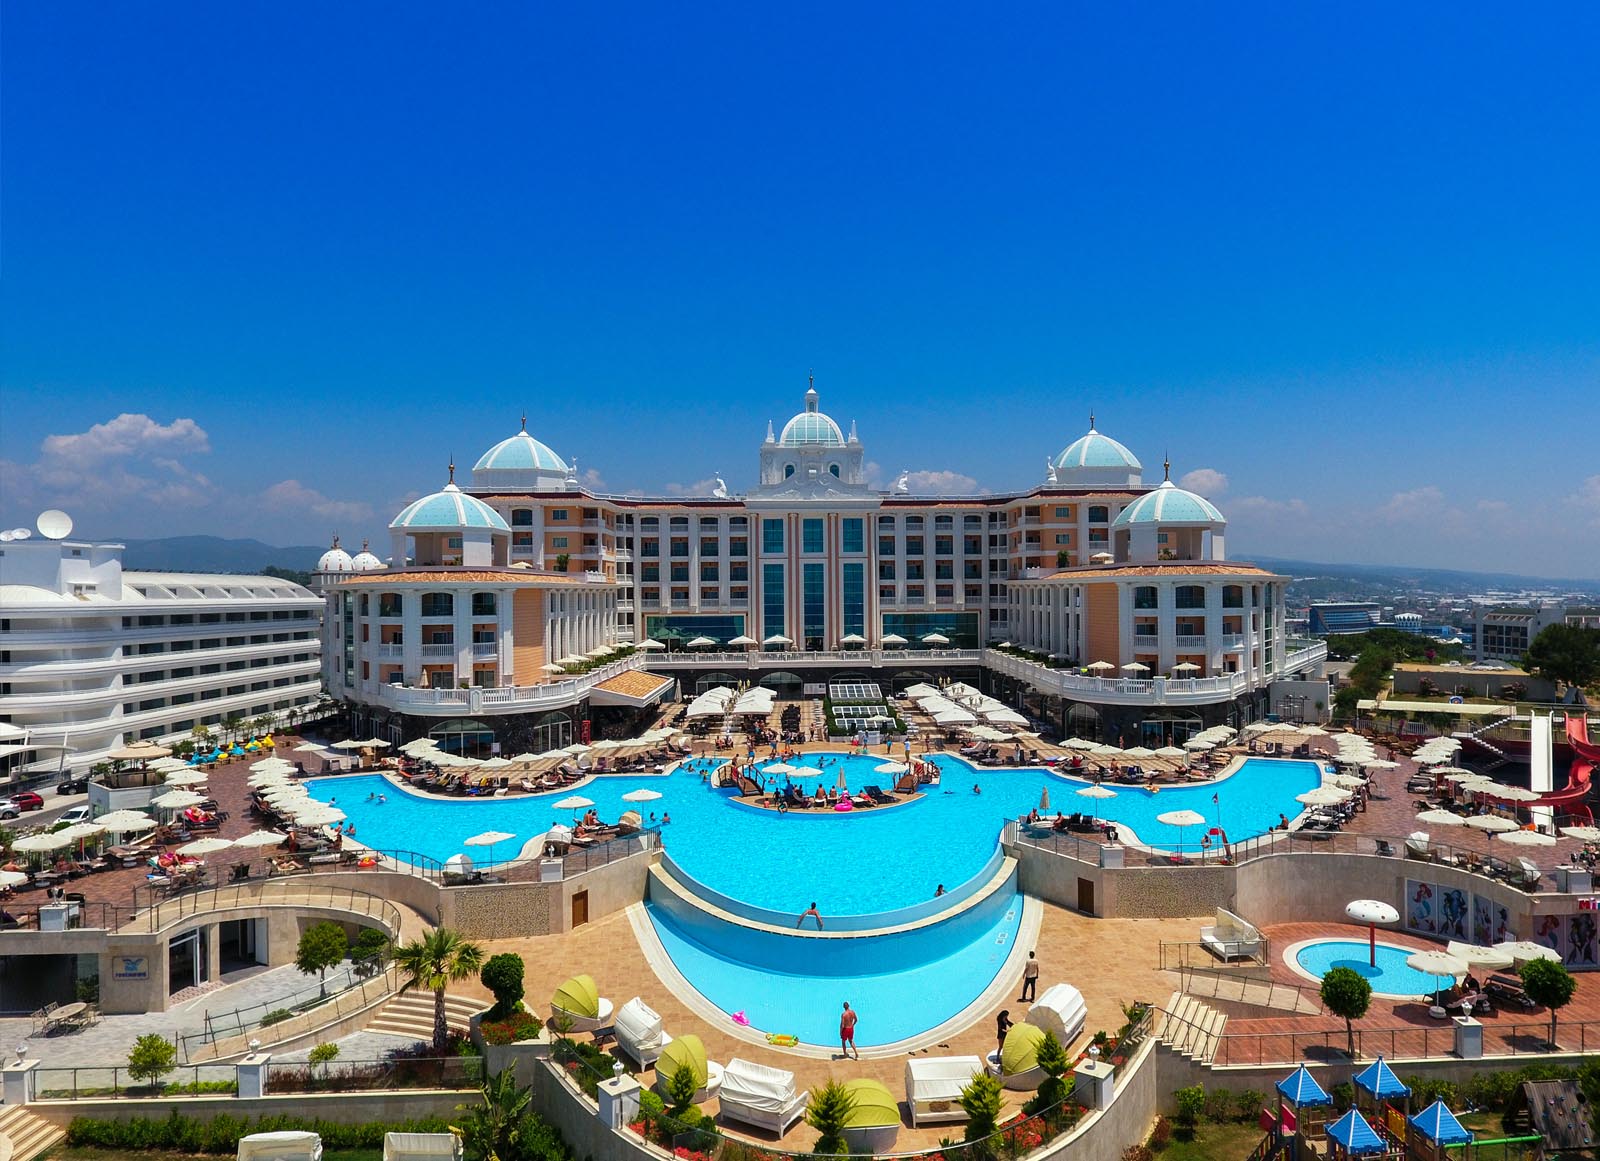 Litore Resort Hotel Spa